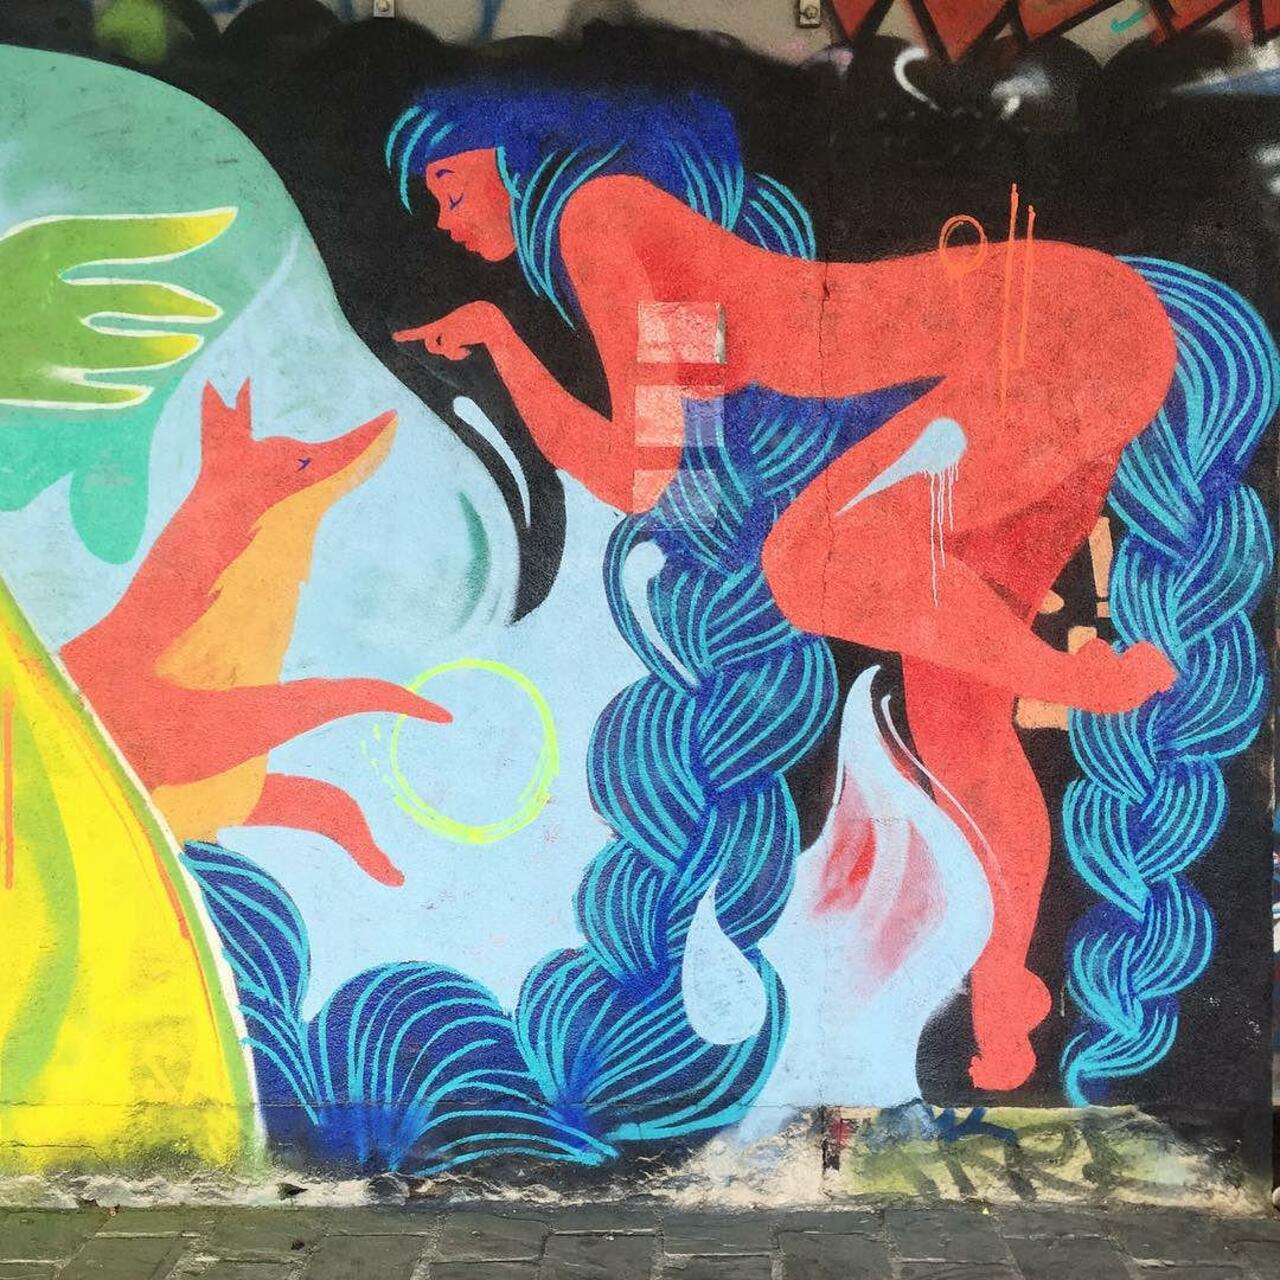 #Paris #graffiti photo by @catscoffeecreativity http://ift.tt/1L3dUtK #StreetArt http://t.co/dX7znue6GF